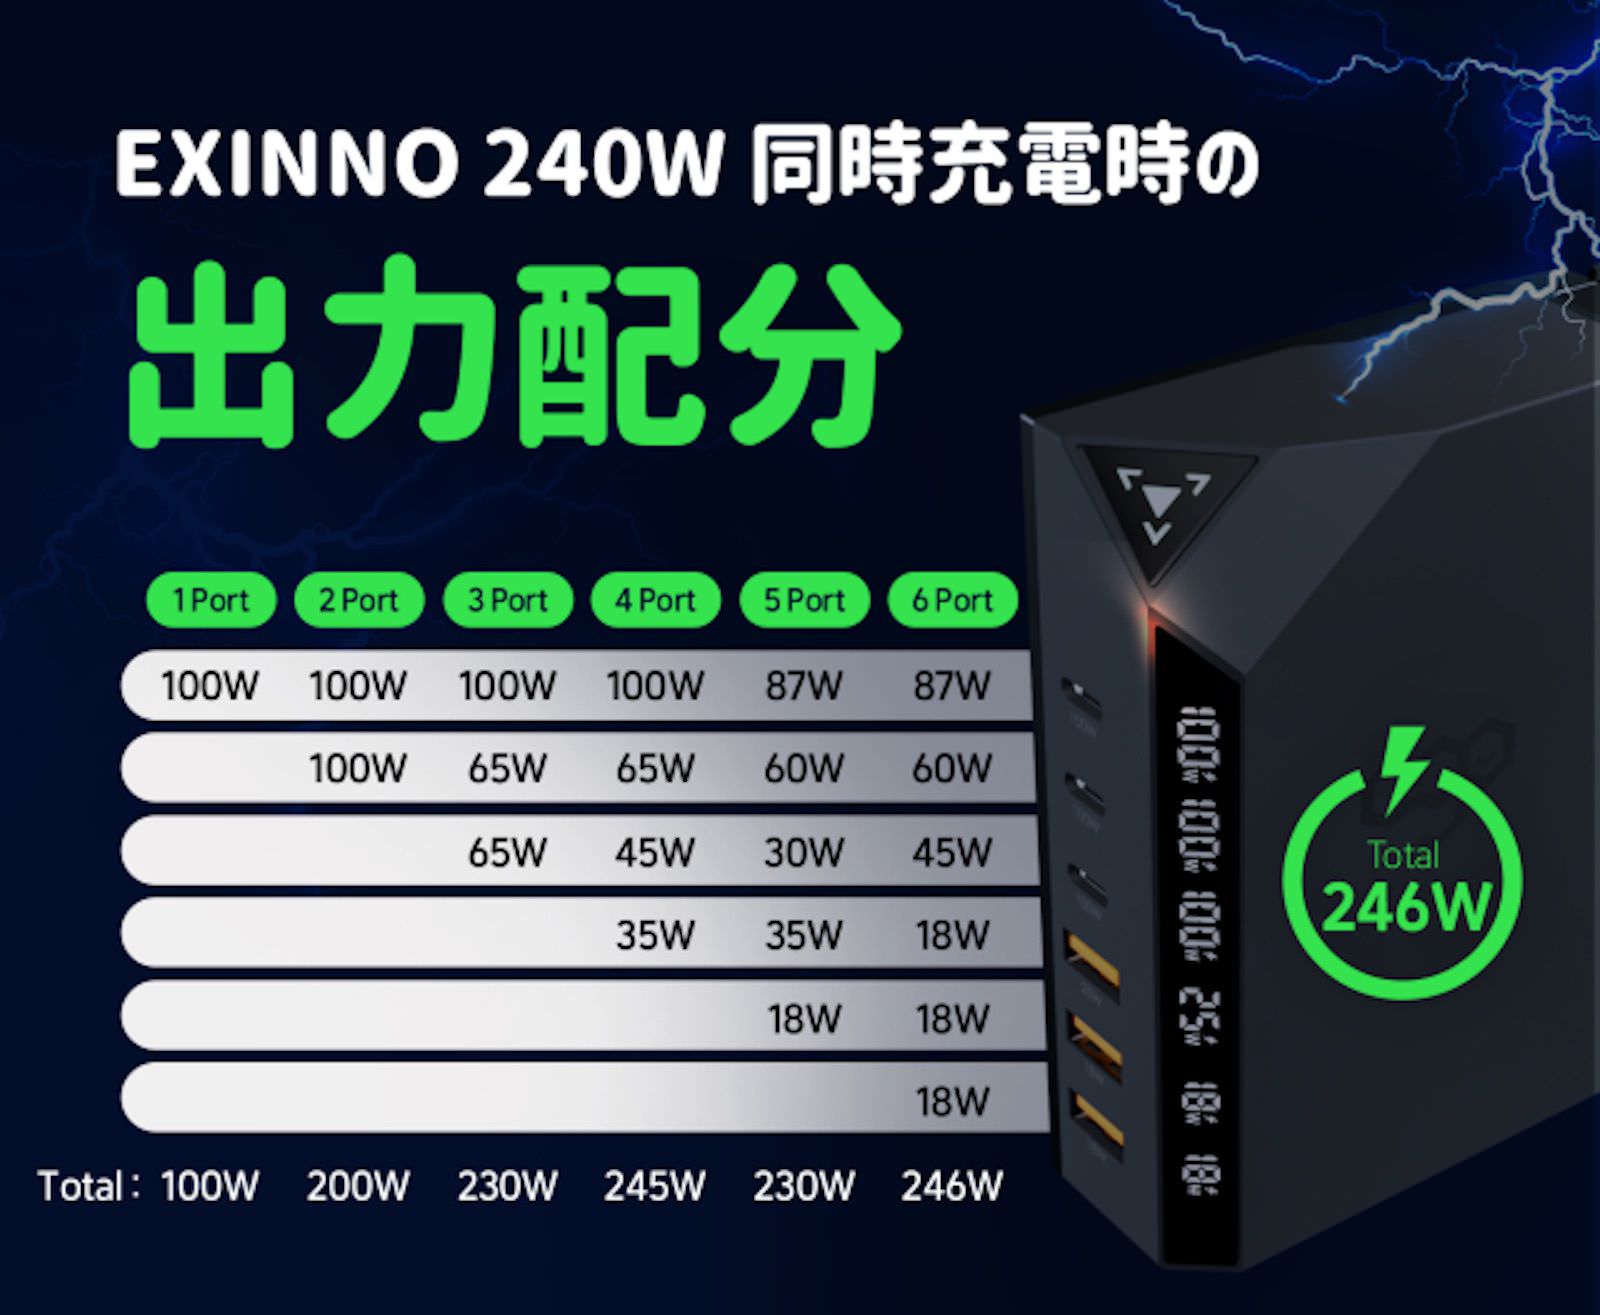 Exinno 240w output